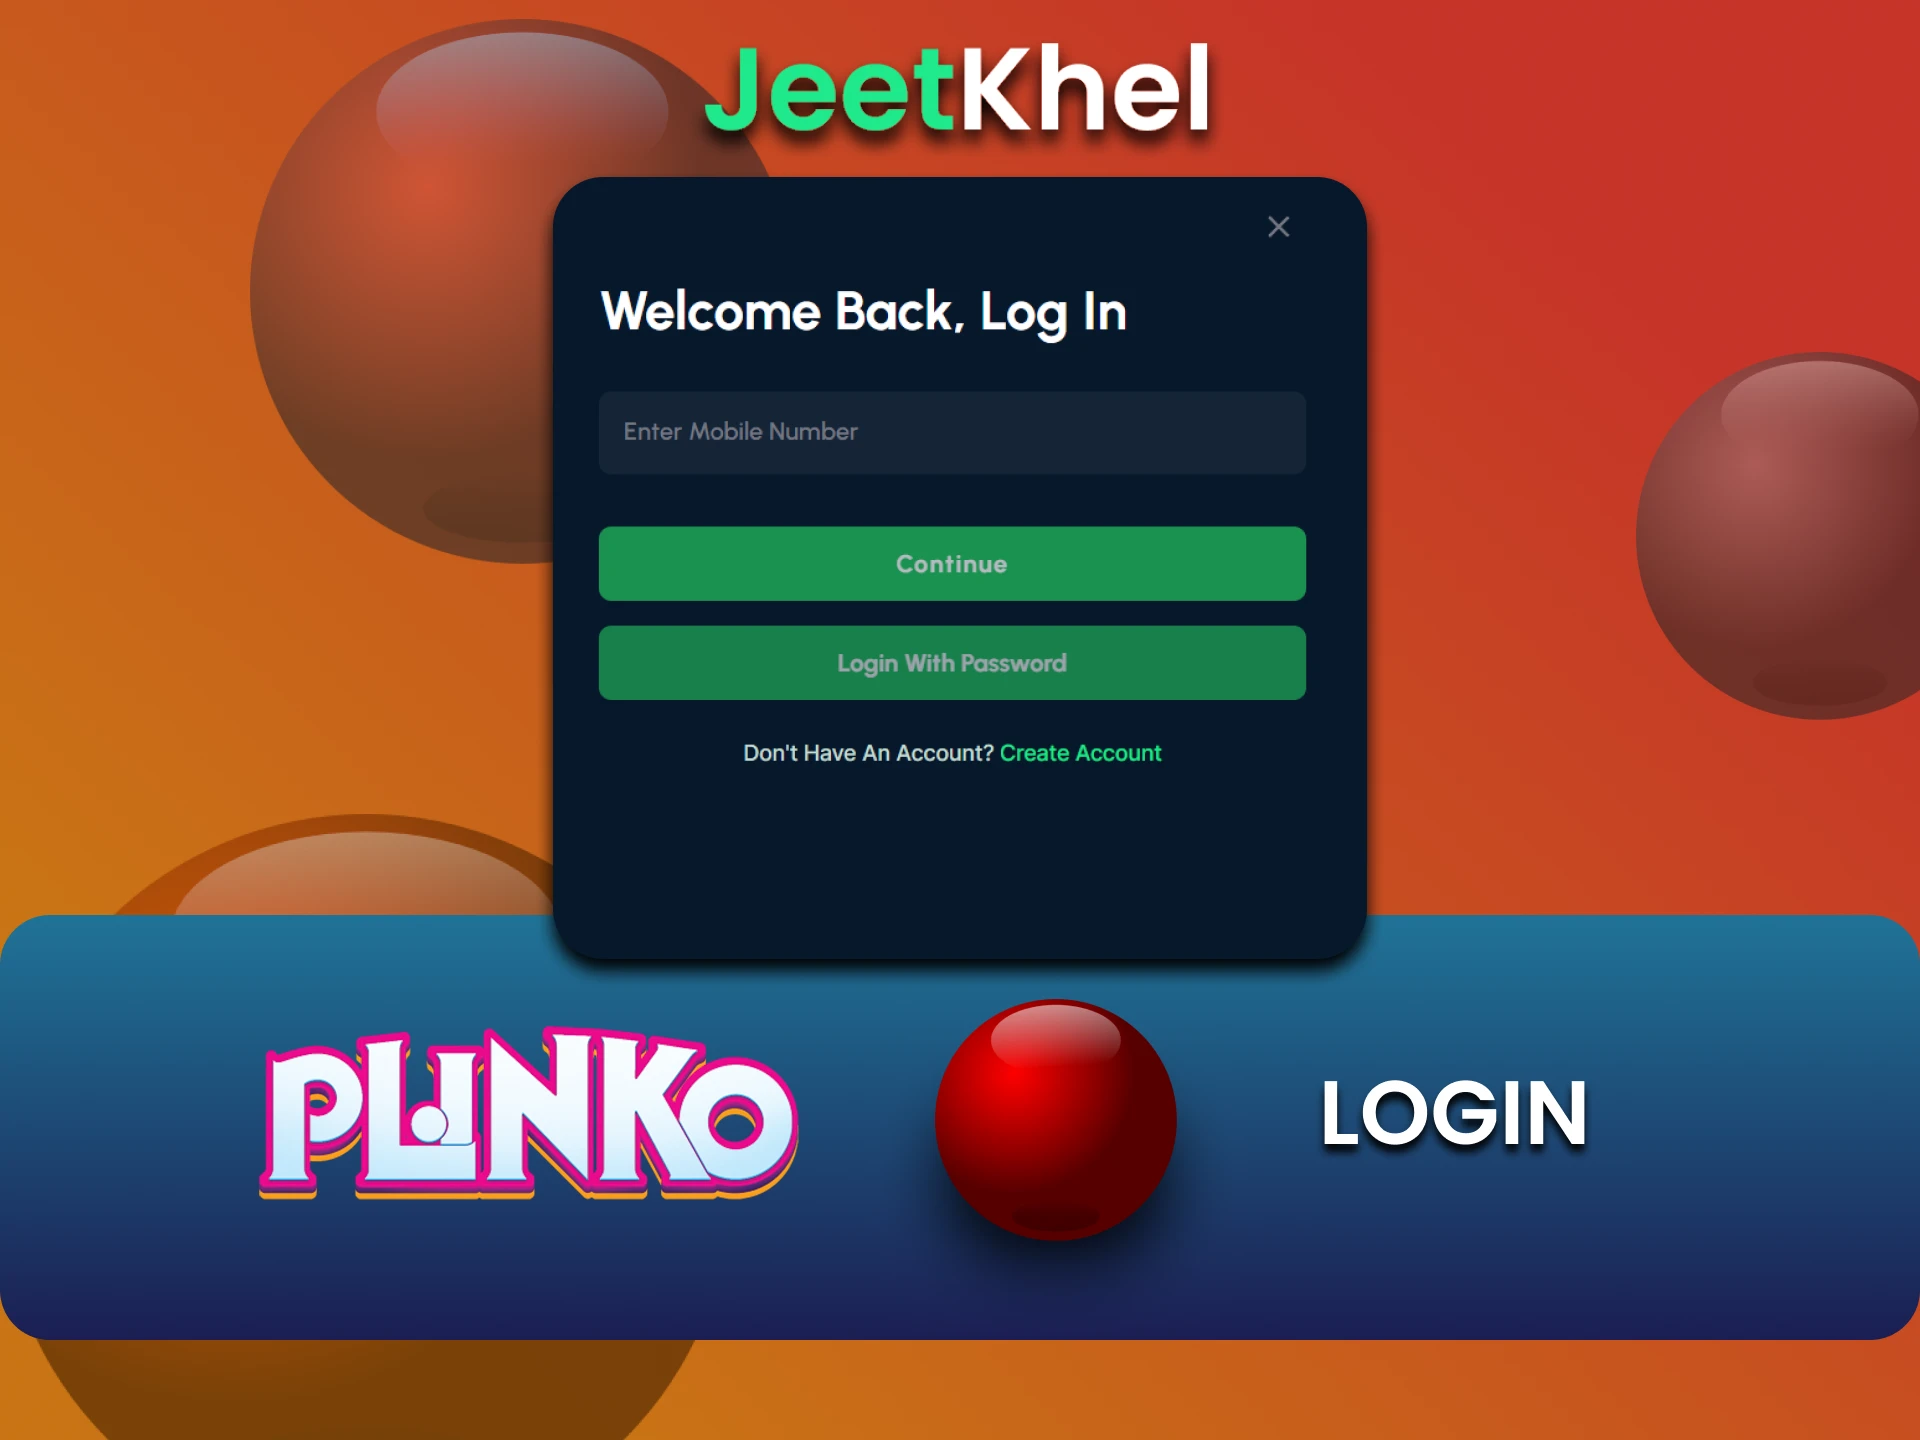 Login to JeetKhel account to play Plinko.